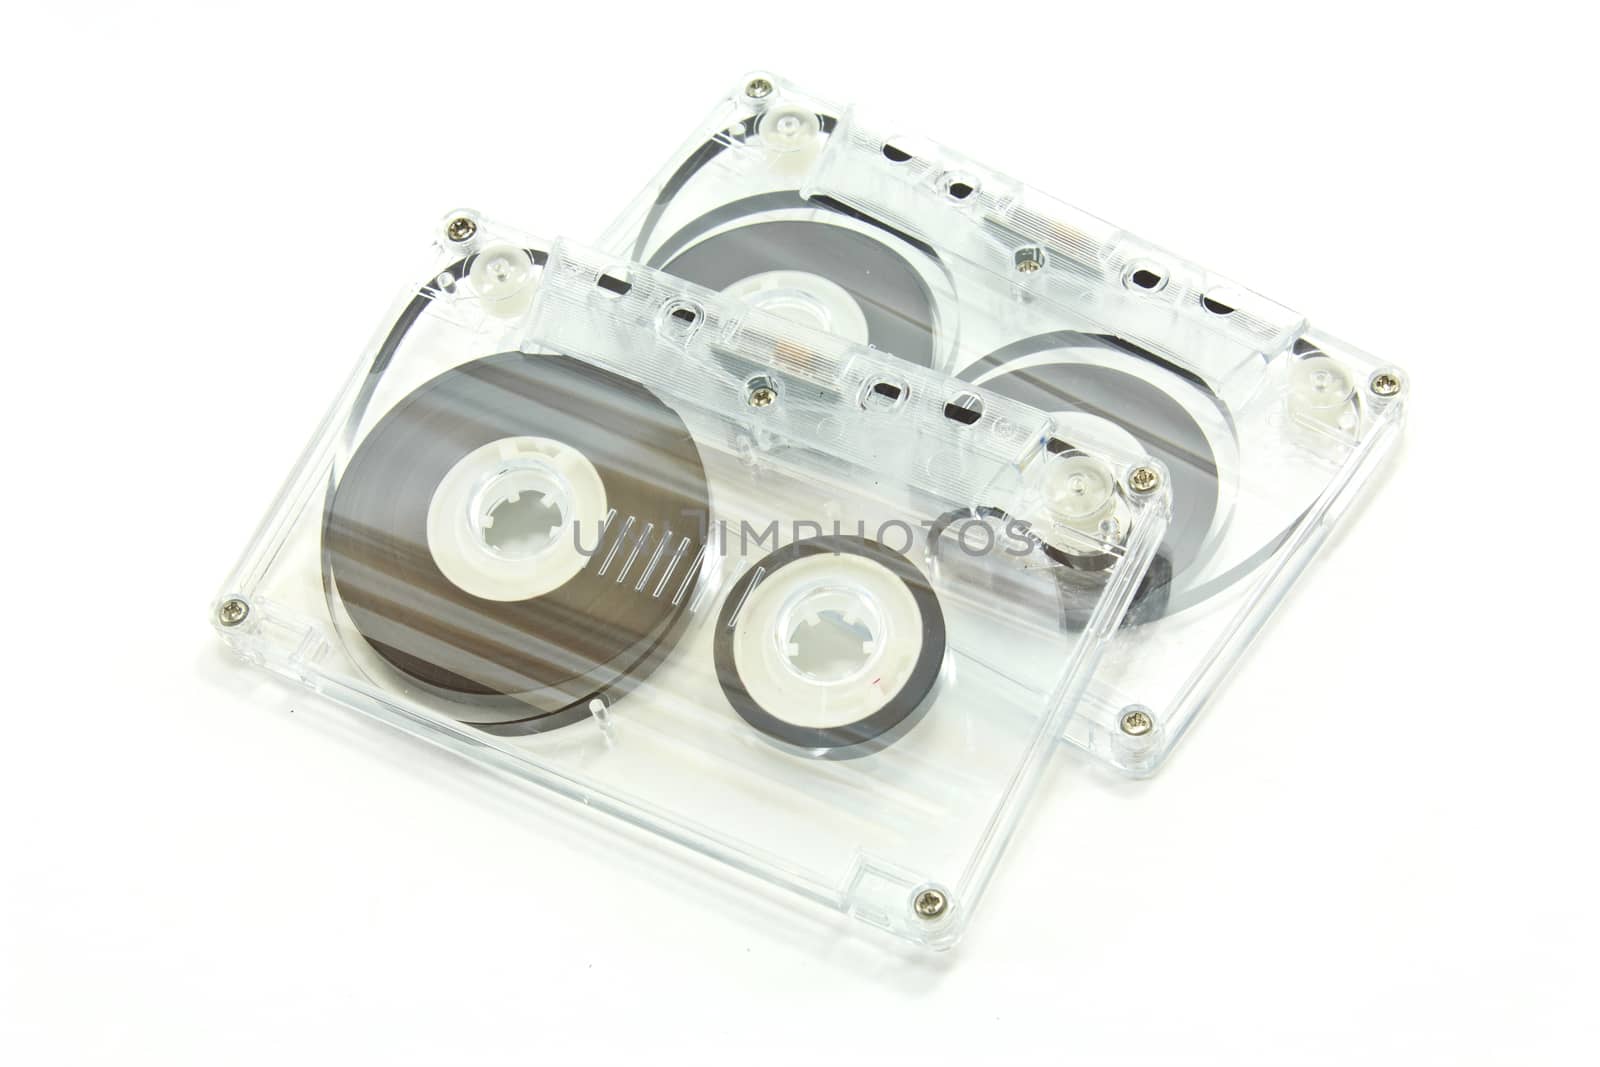 Two transparent cassete tape